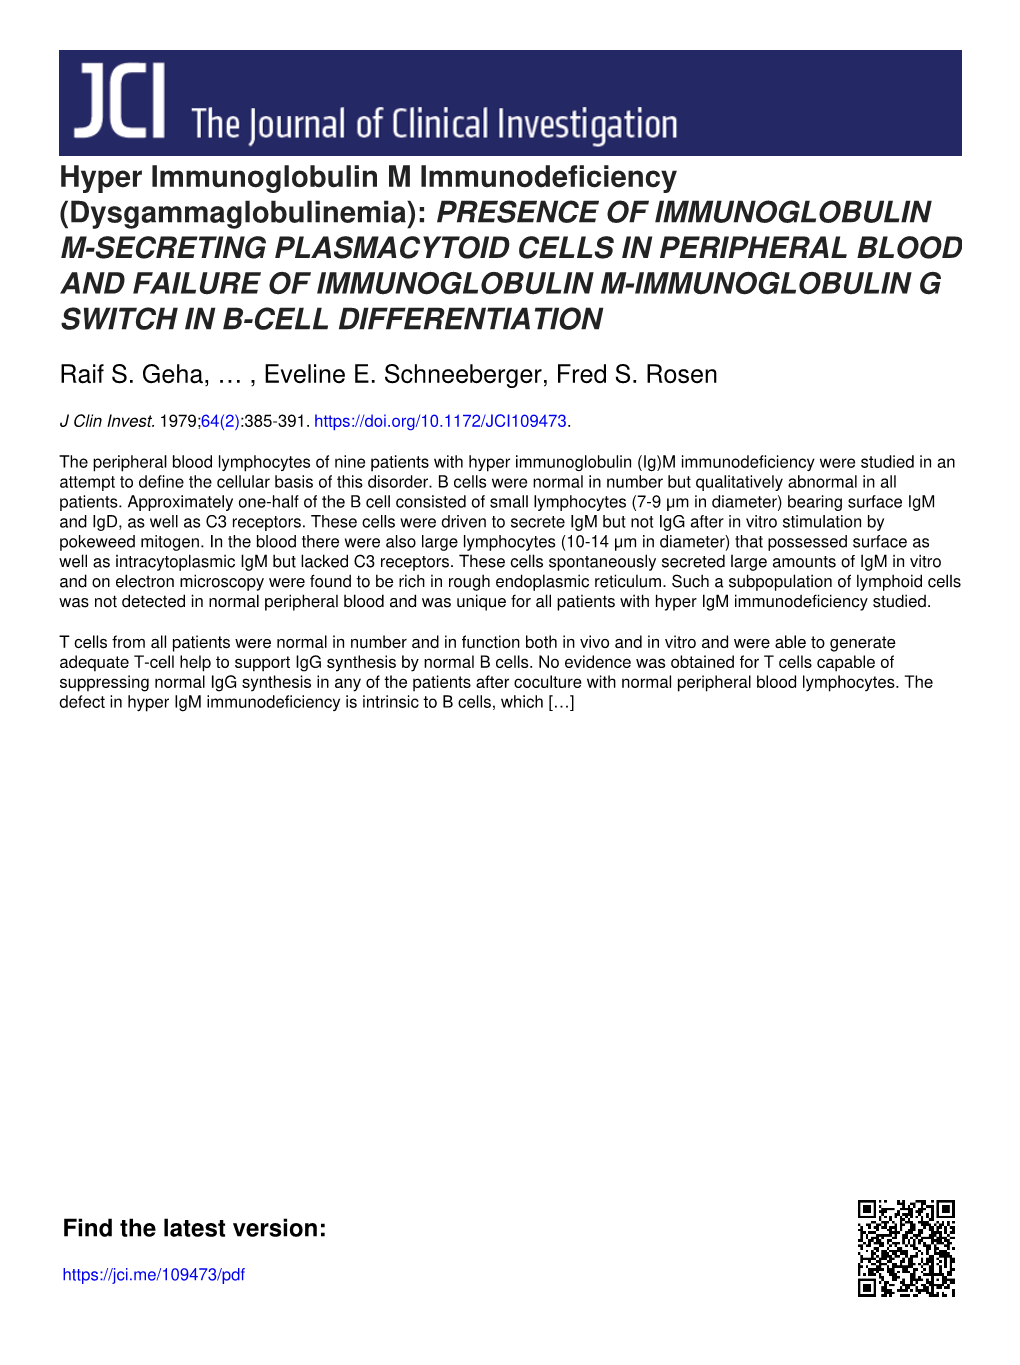 Hyper Immunoglobulin M Immunodeficiency